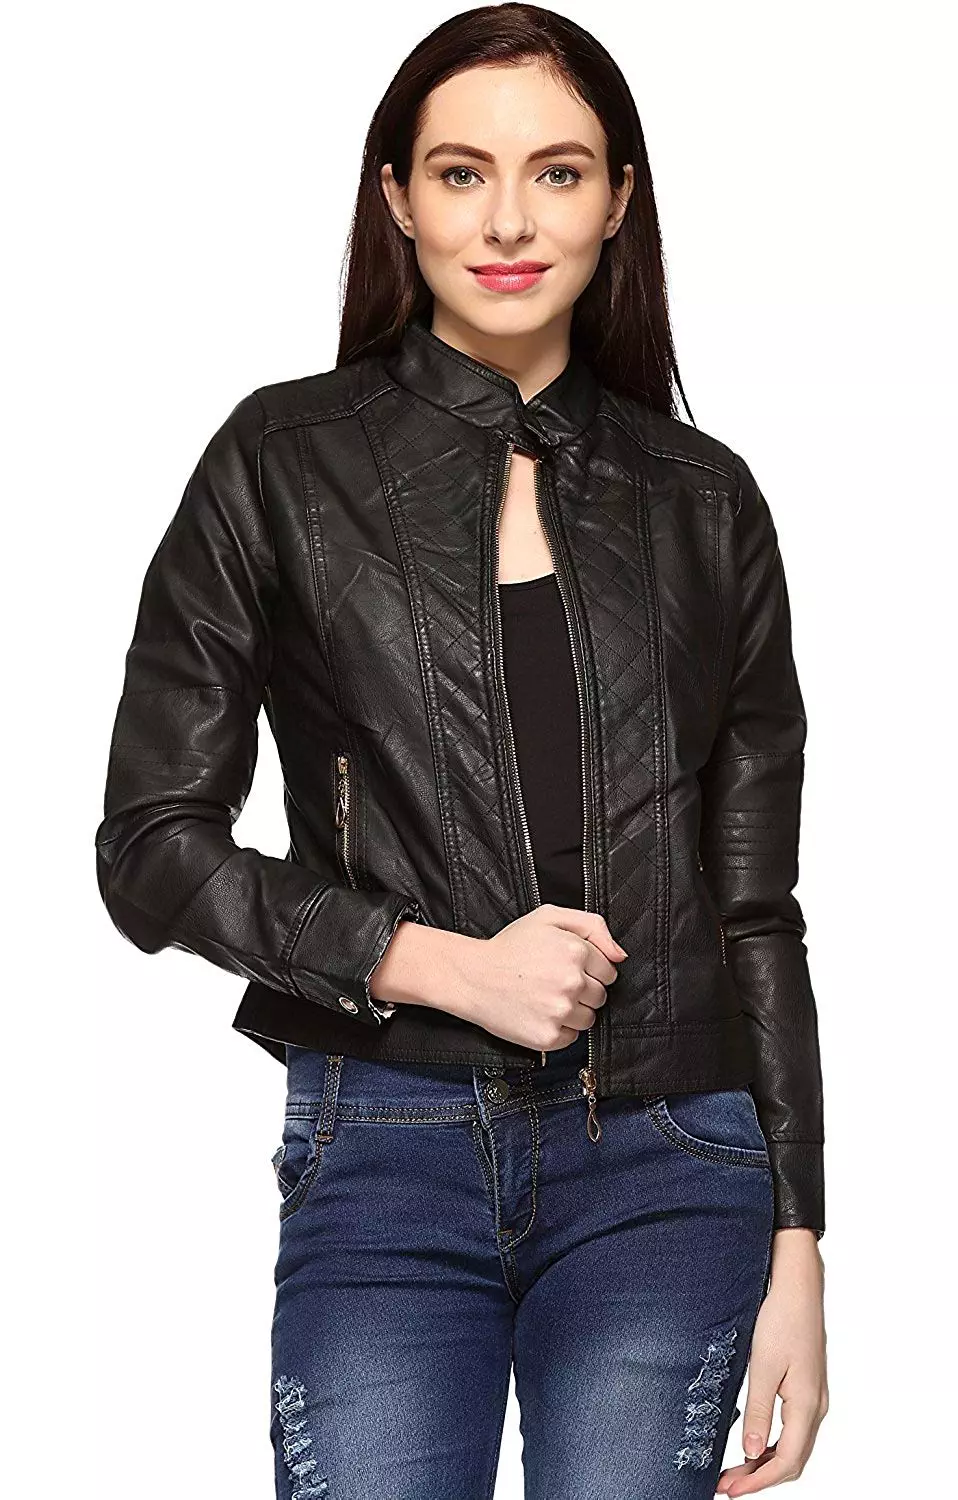 black leather jacket for women